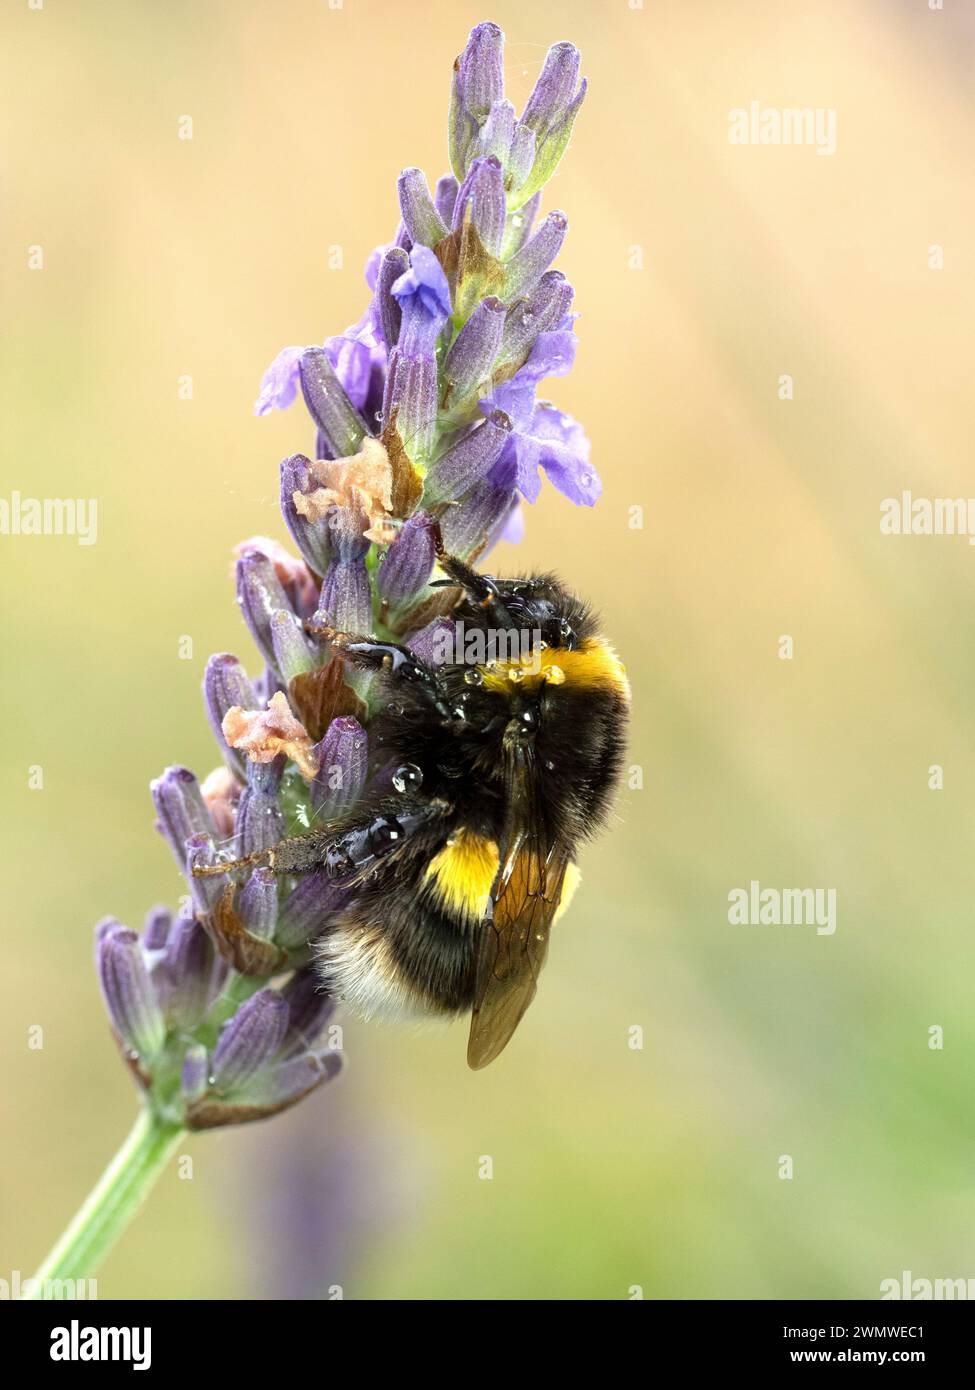 Bumble Bee on Lavender (Bombus terrestris) in Garden, Ramsgate, Kent UK Banque D'Images